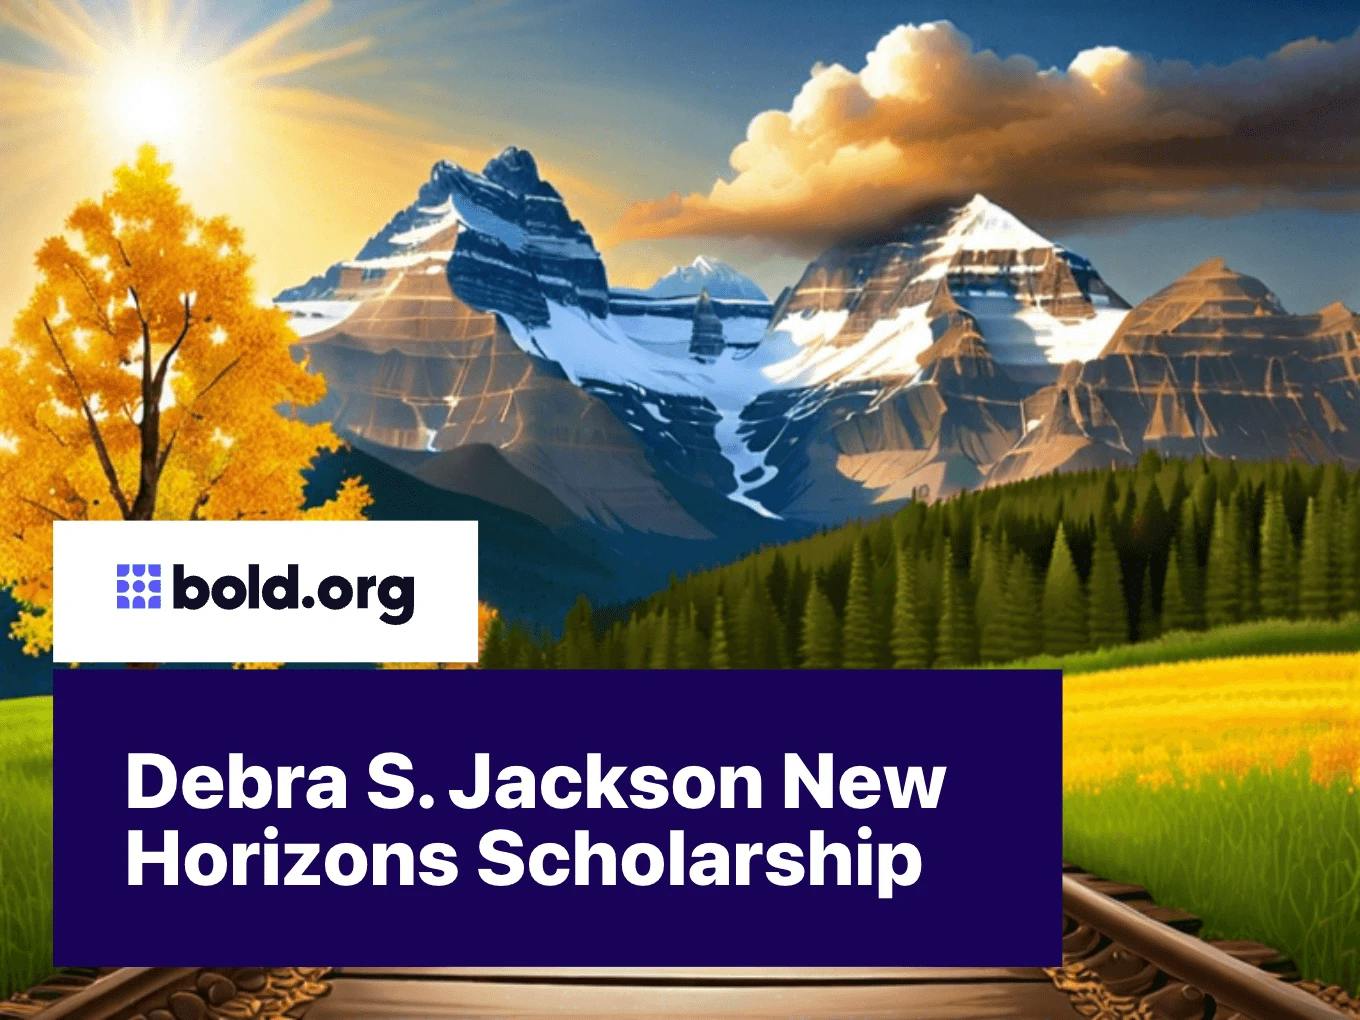 Debra S. Jackson New Horizons Scholarship